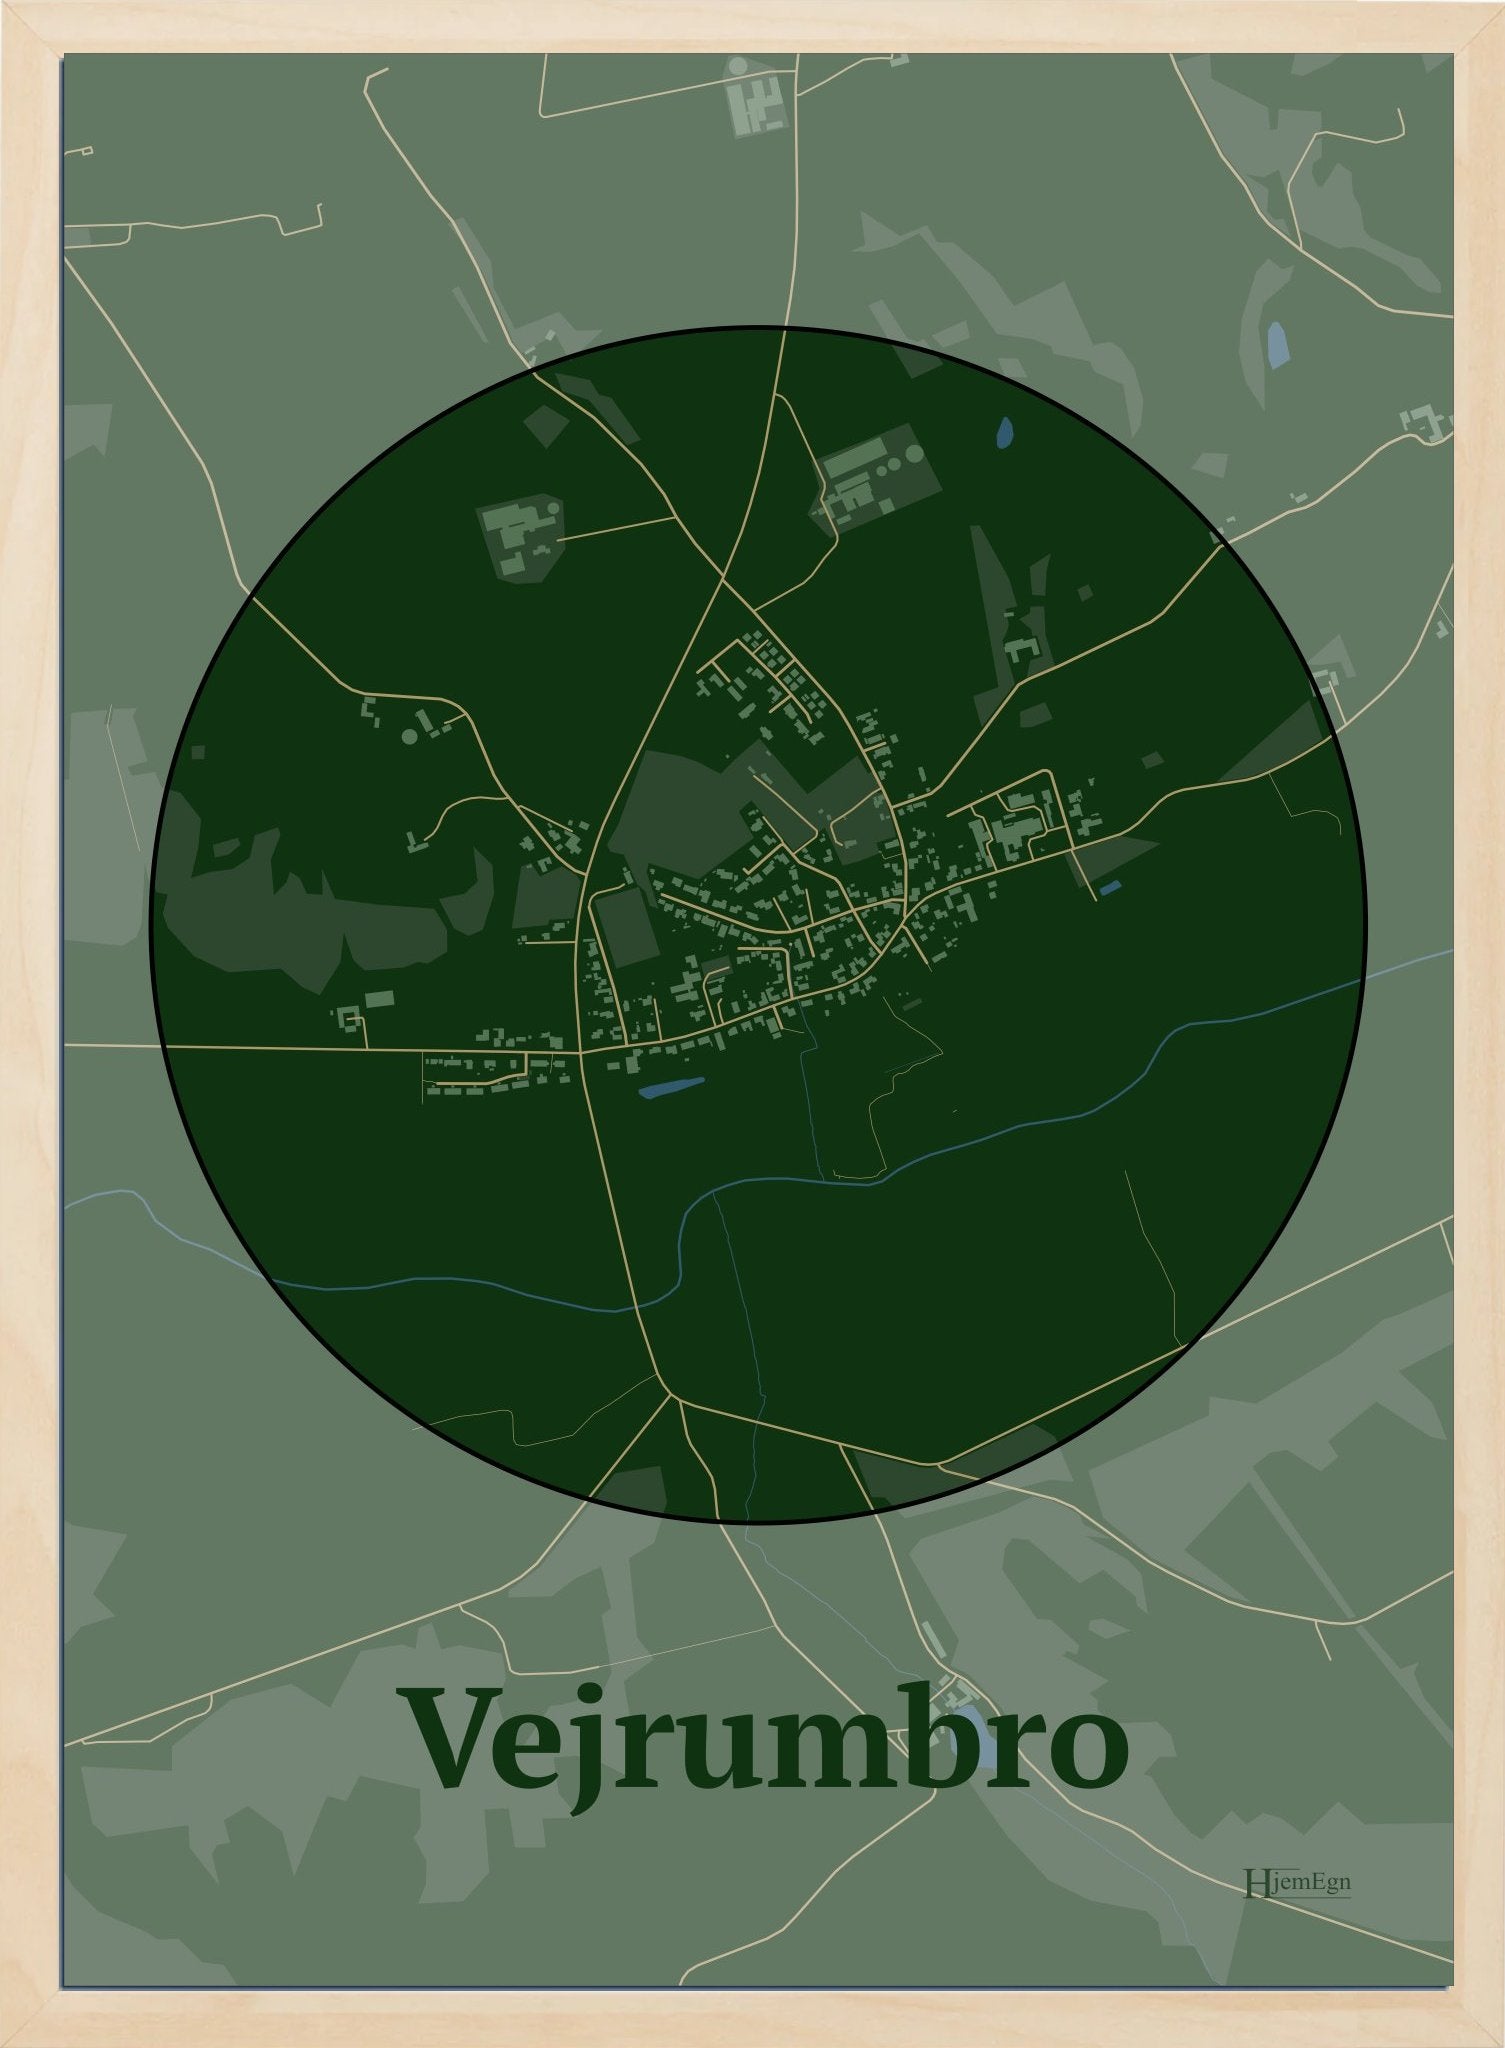 Vejrumbro plakat i farve mørk grøn og HjemEgn.dk design centrum. Design bykort for Vejrumbro